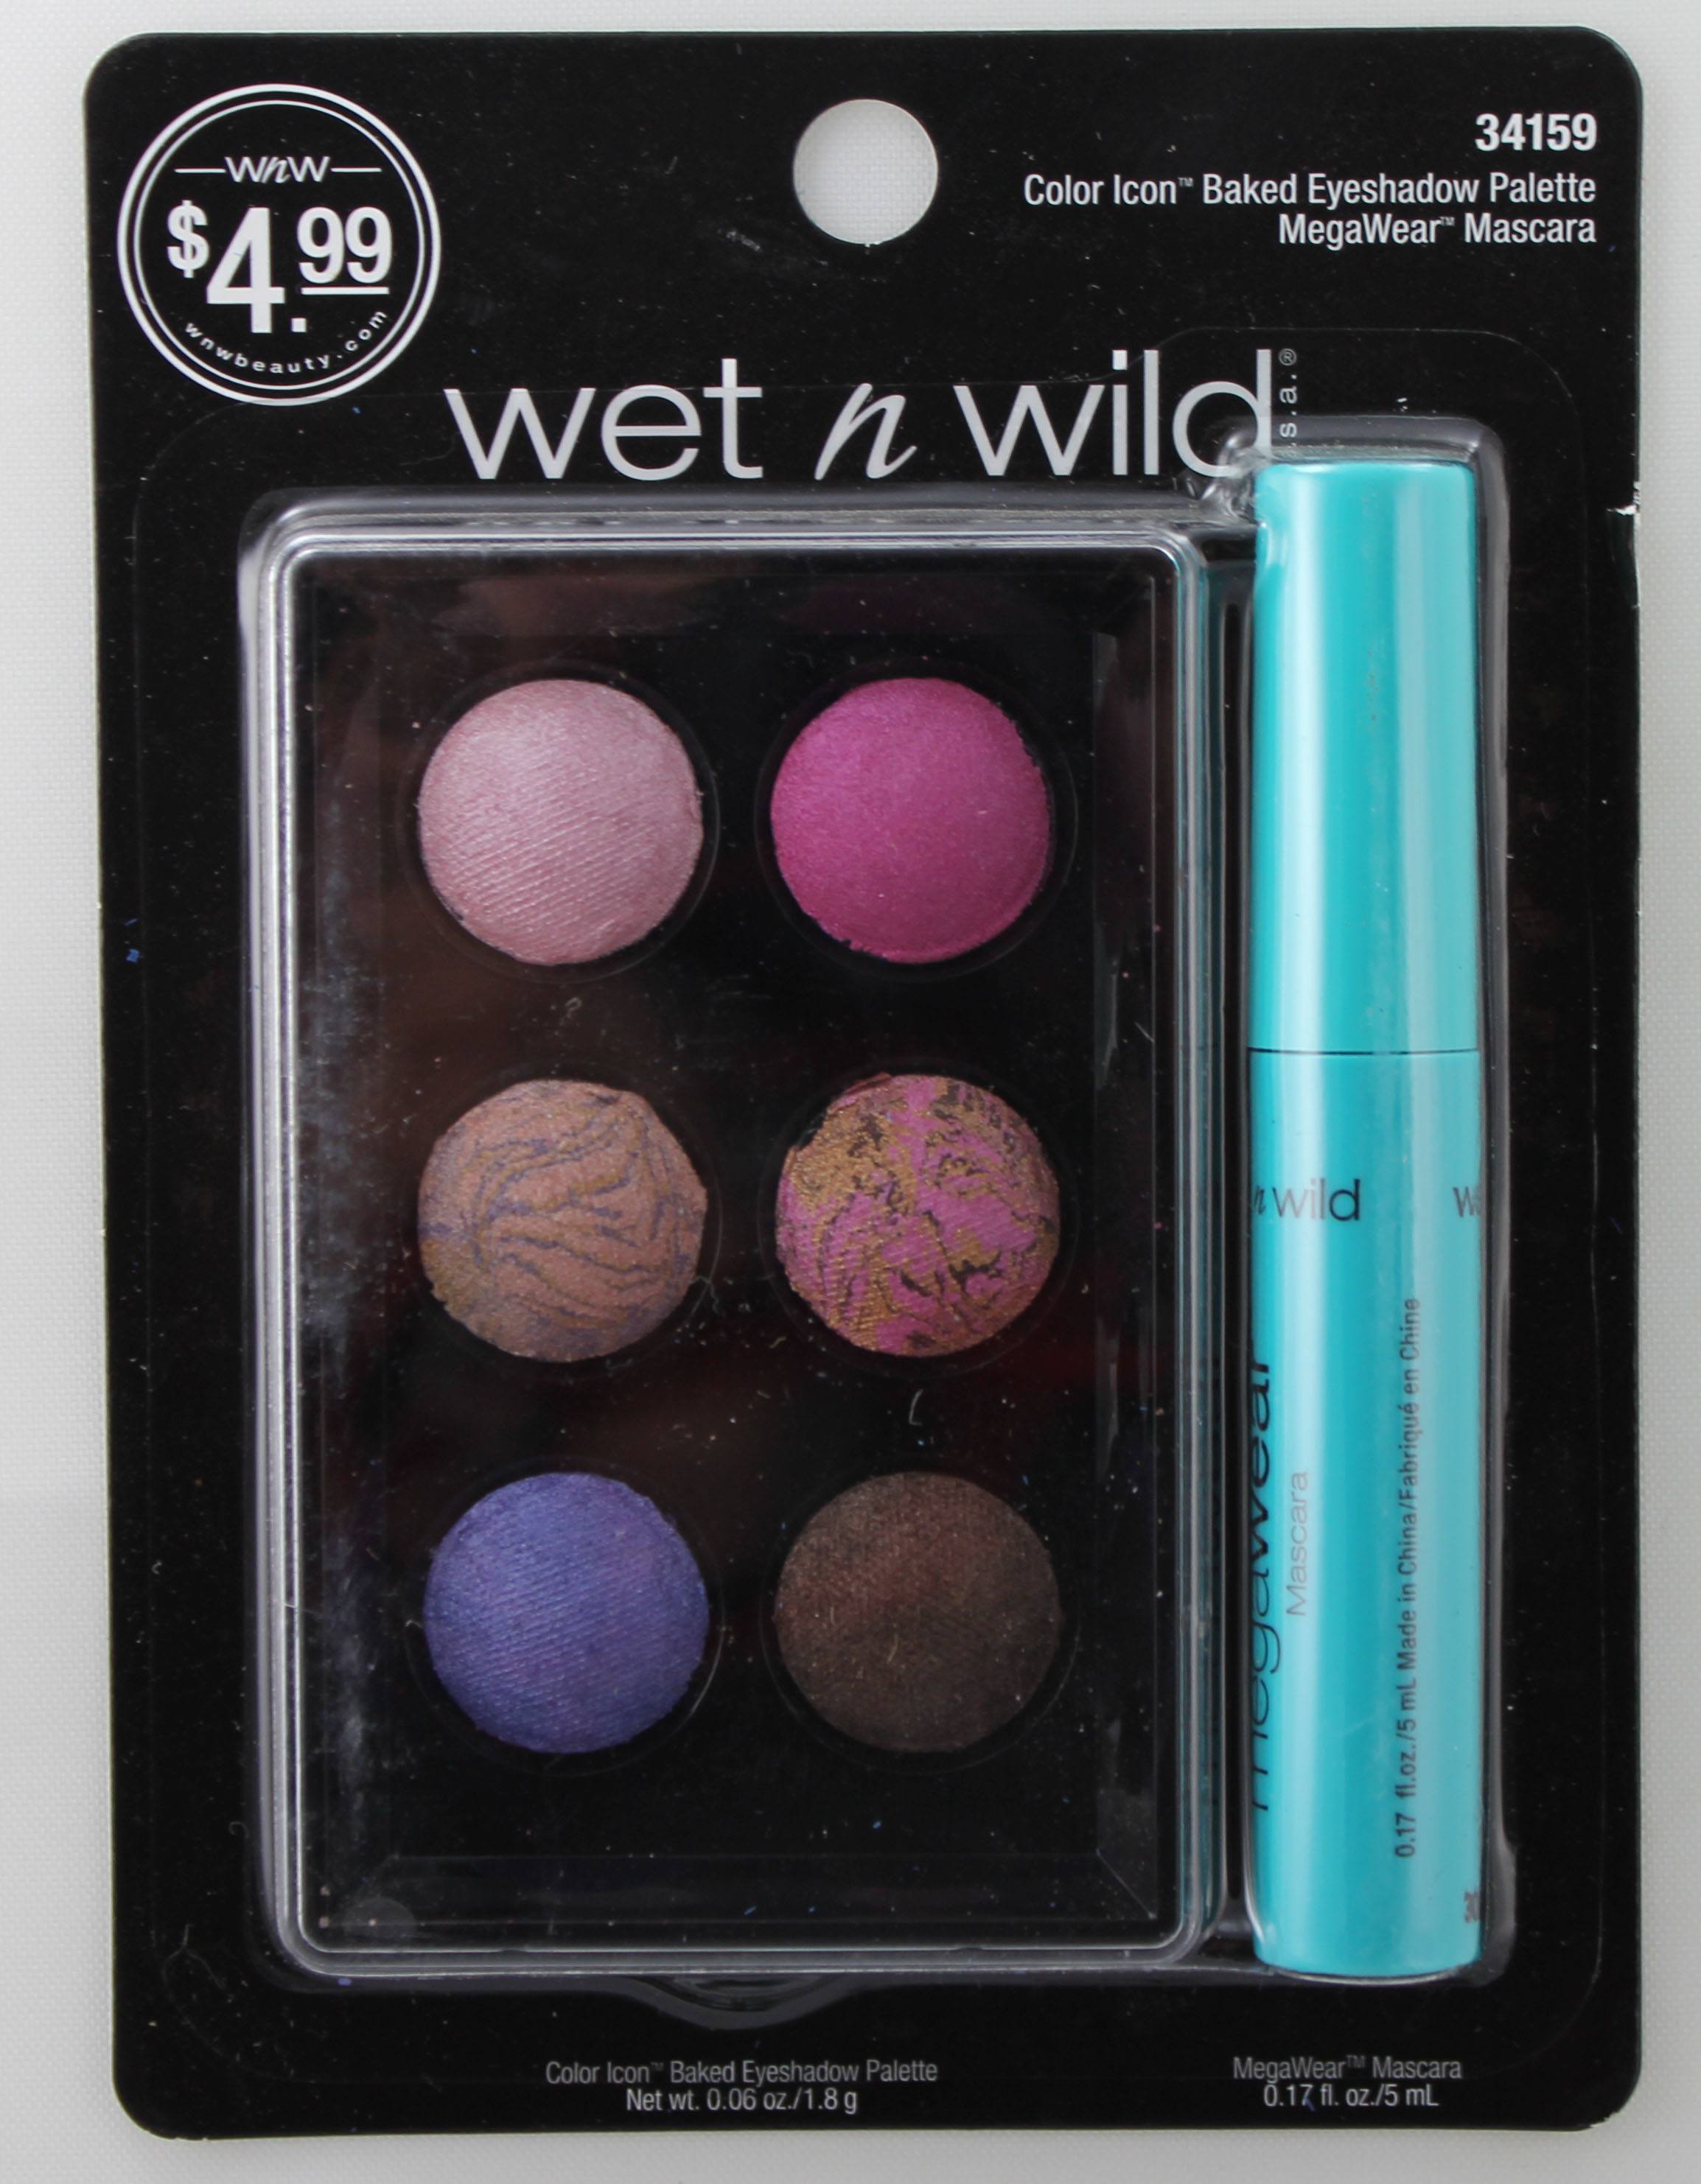 Wet N Wild Color Icon Pan Baked Eyeshadow Palette & MegaWear Mascara